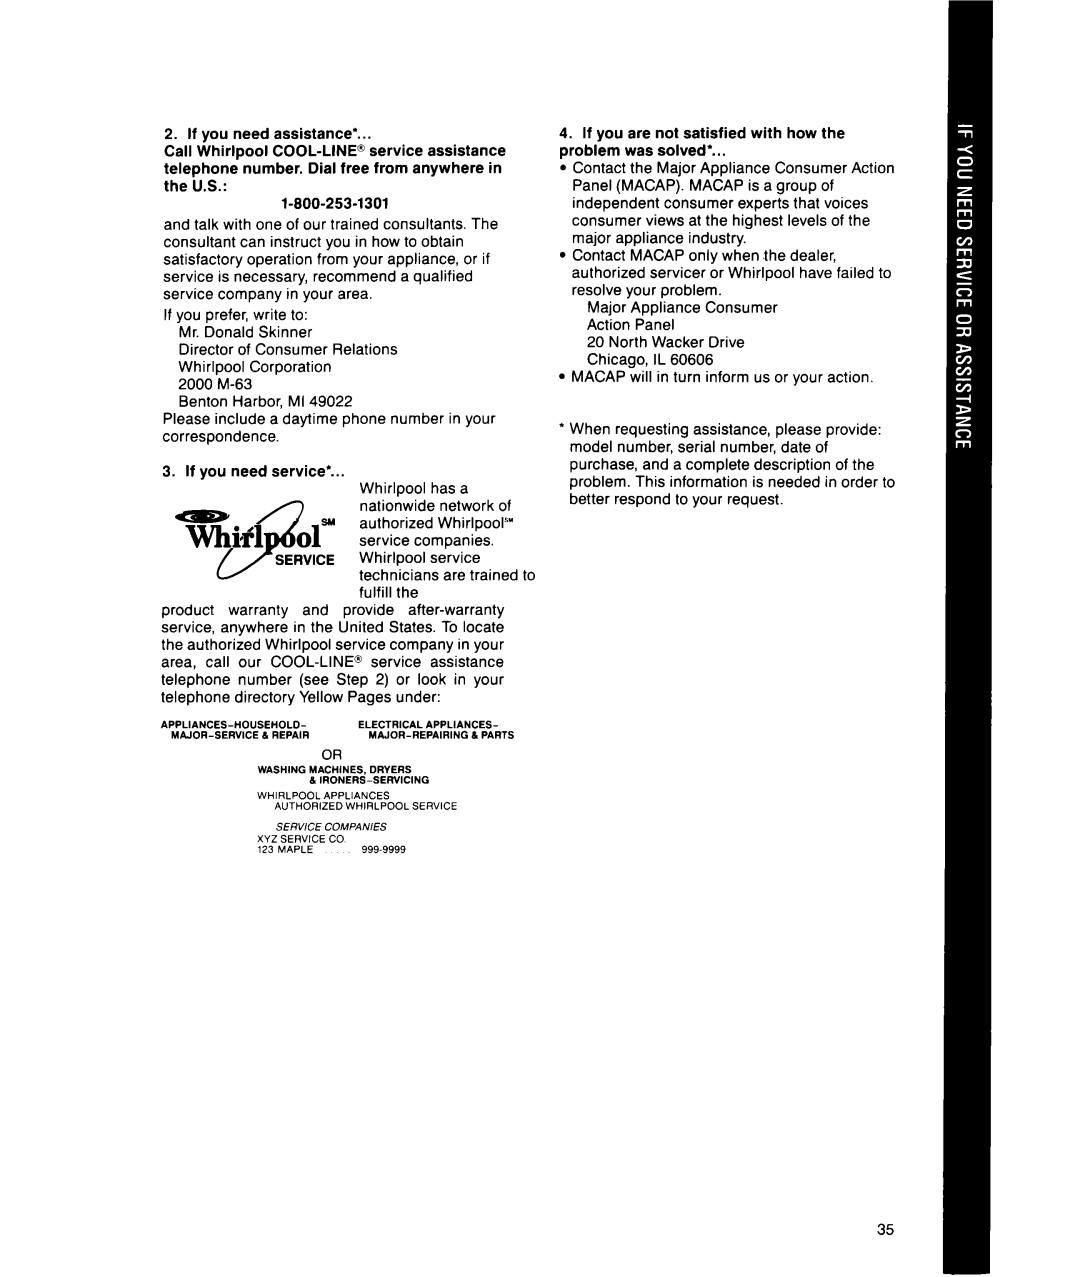 Whirlpool MS1451XWI, MS1650XW manual If you need assistance’ 